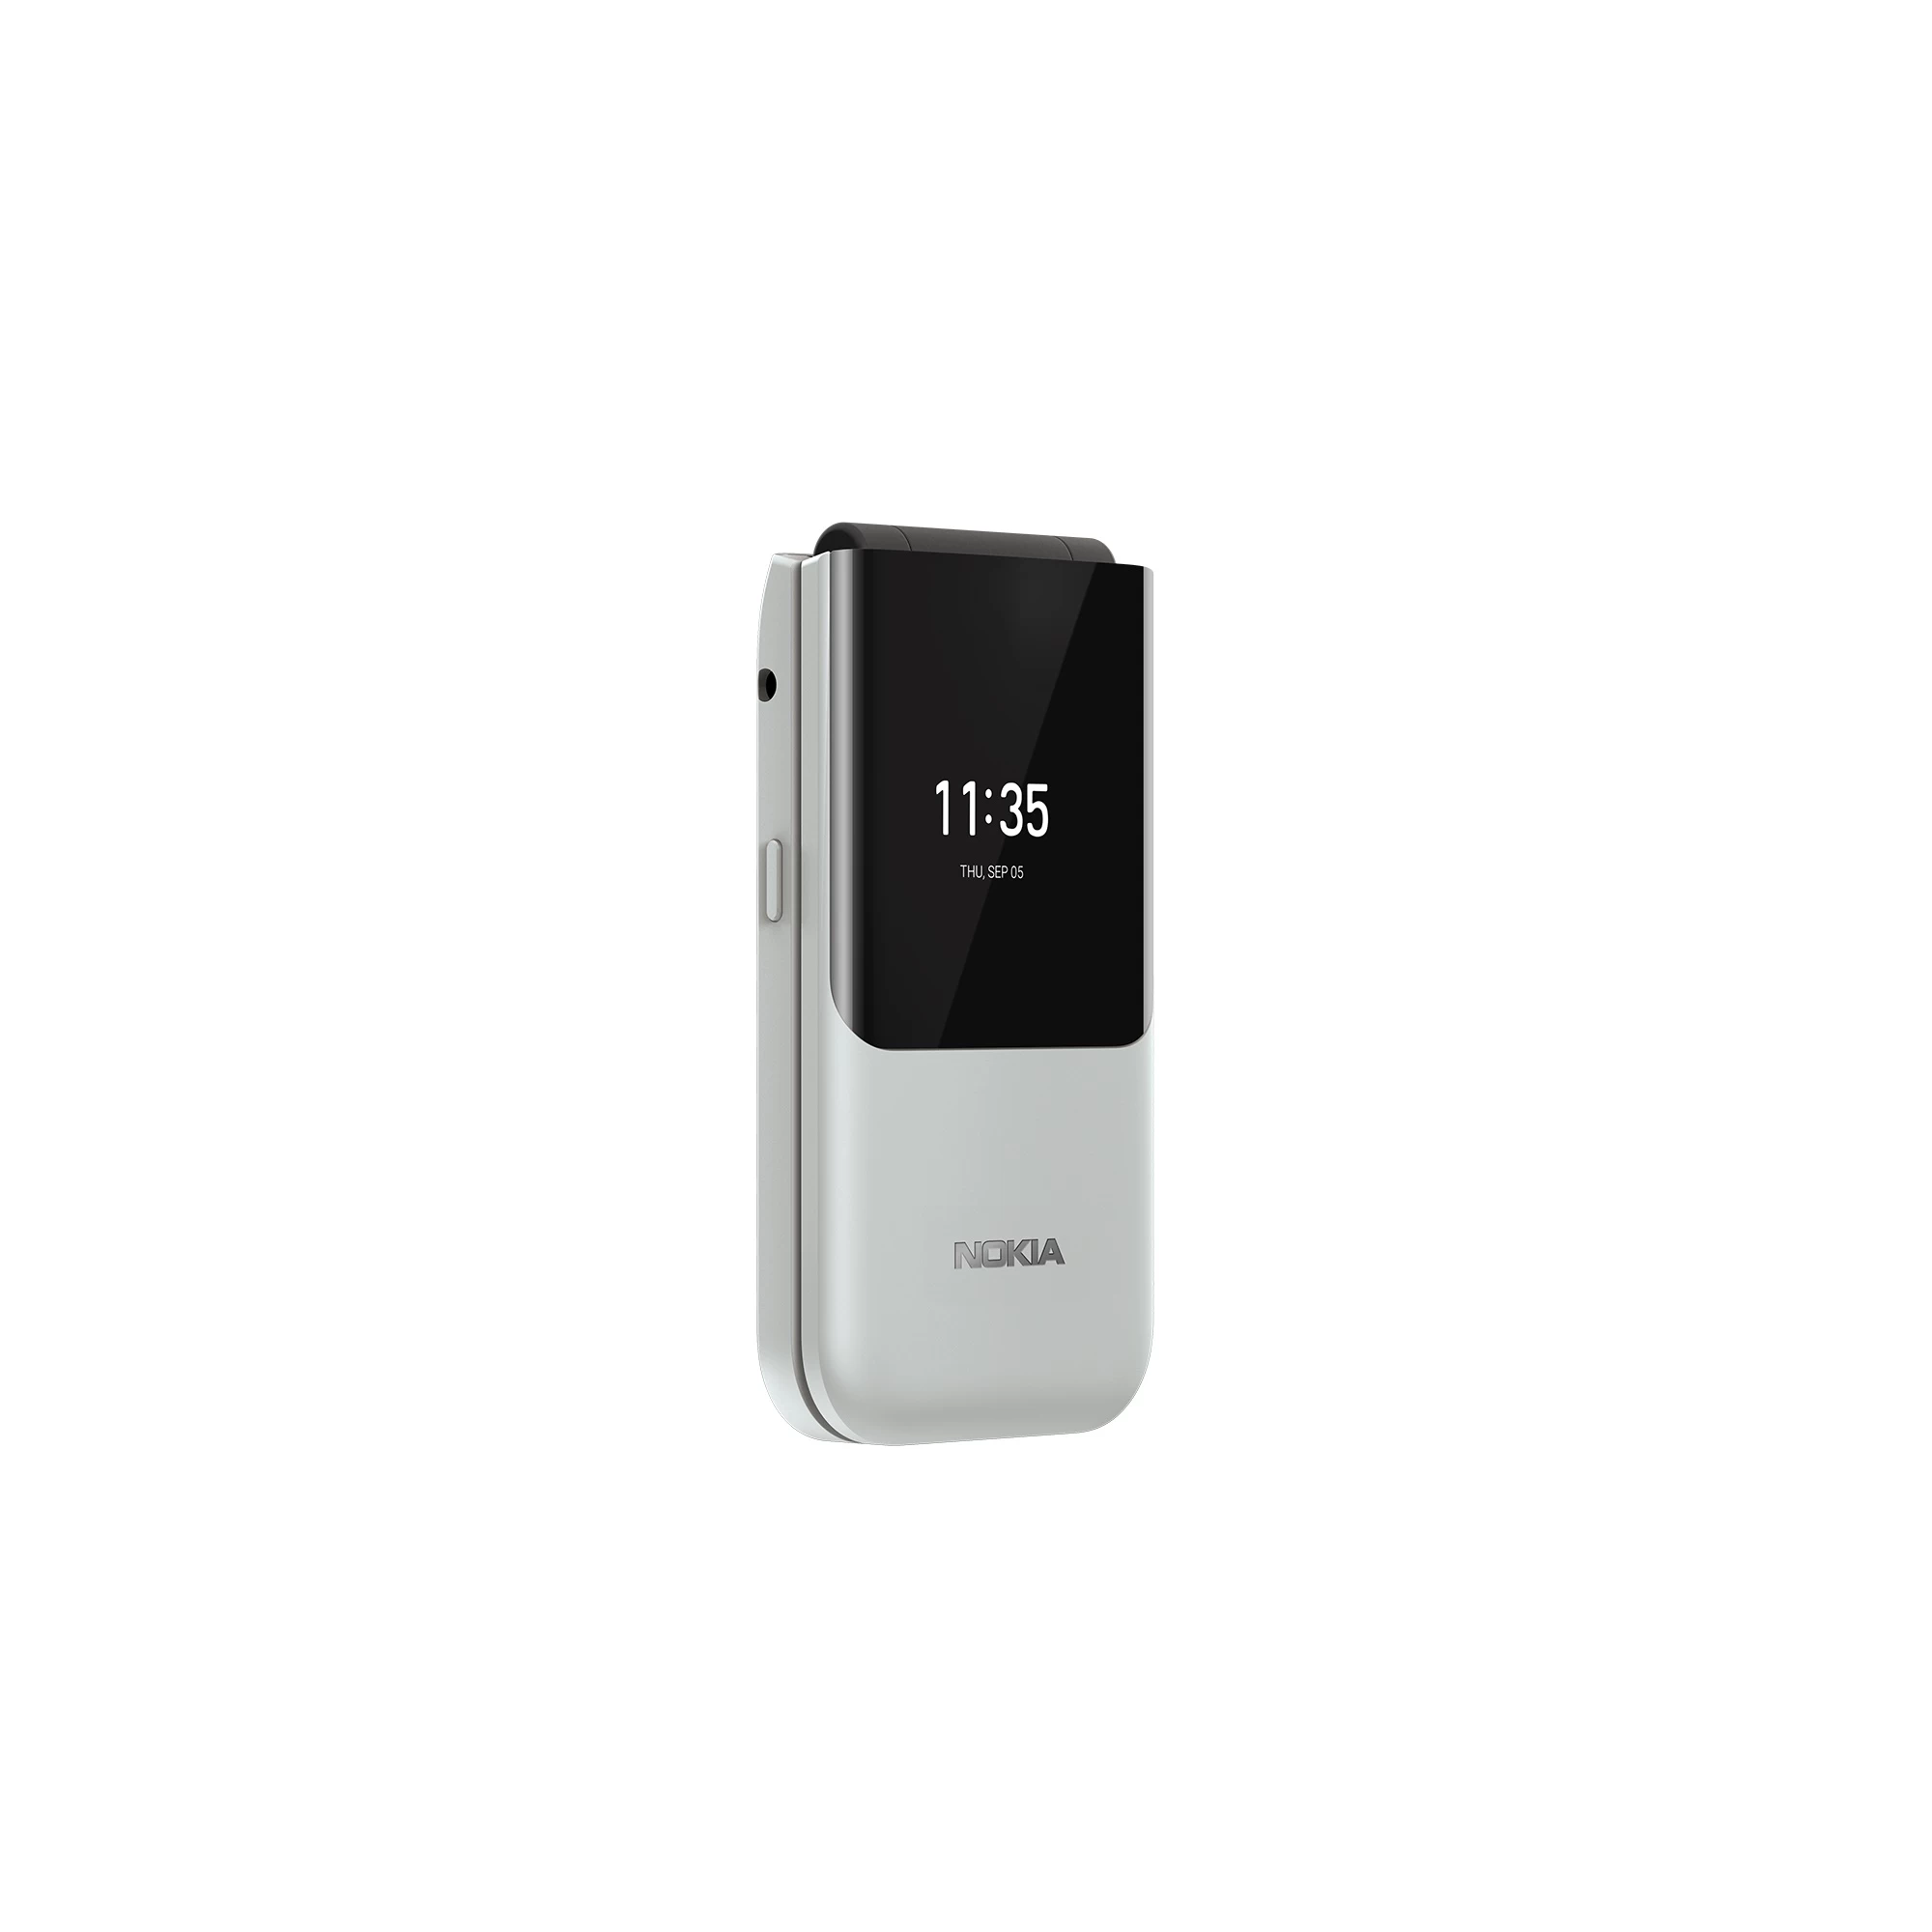 Nokia 2720 Flip 16 | lazada | Nokia 2720 Flip โทรศัพท์ฝาพับสุดคลาสสิคที่มาพร้อมการเชื่อมต่อแบบ 4G ในราคา 2,790 บาท